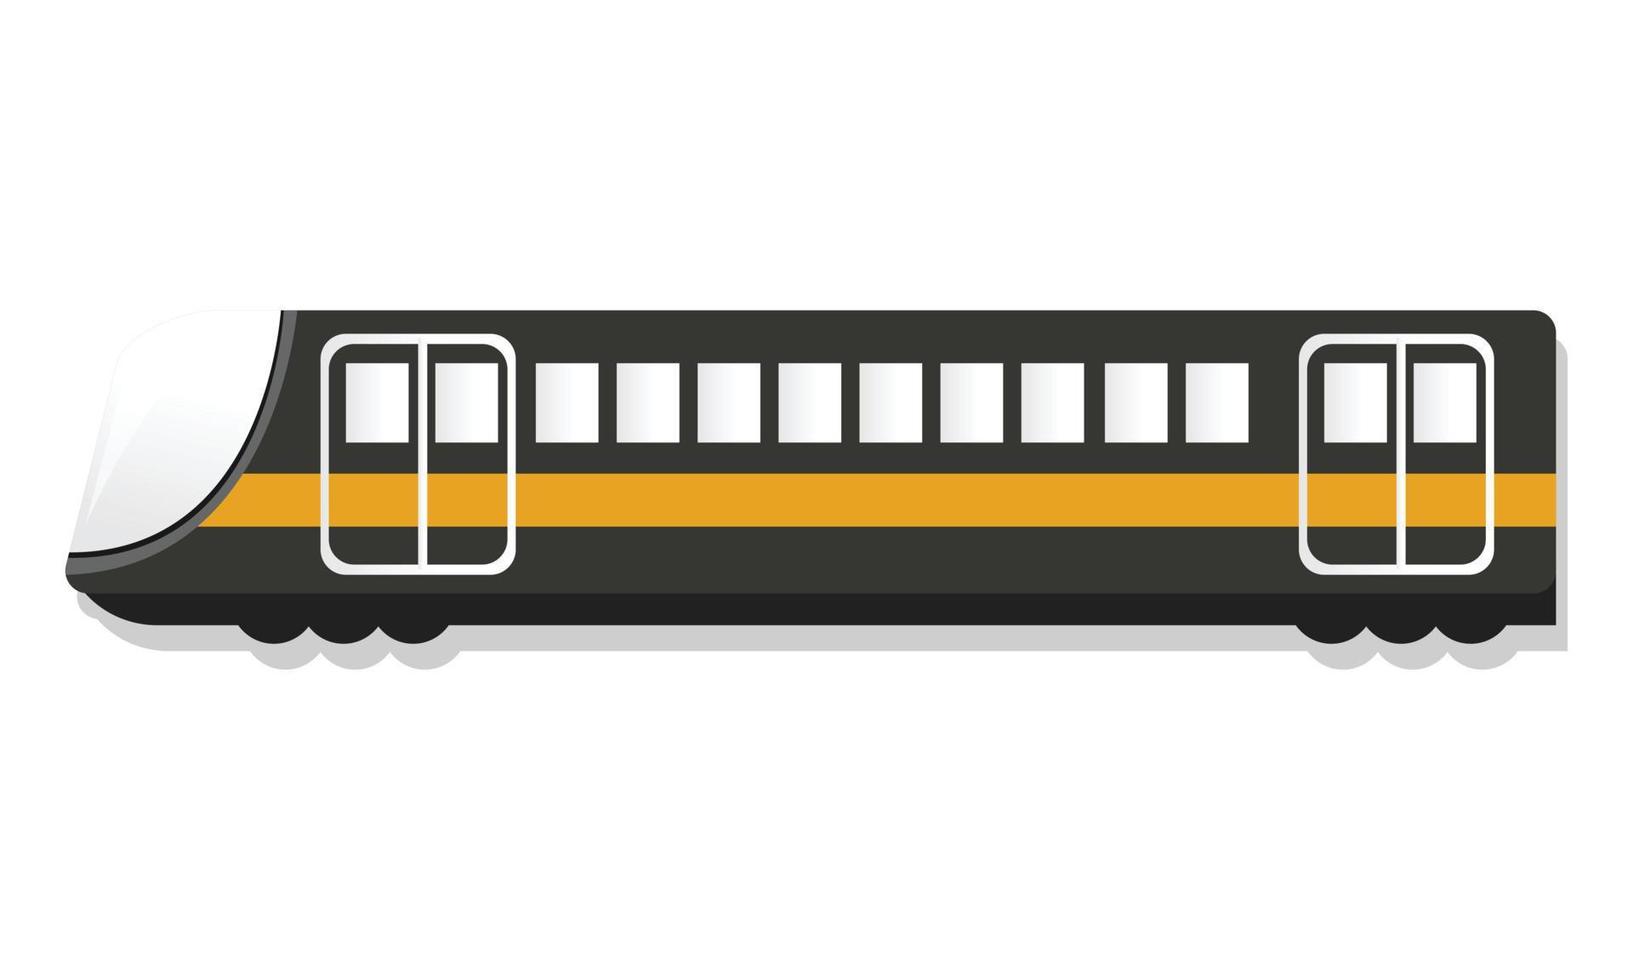 Urban passenger train icon, cartoon style vector